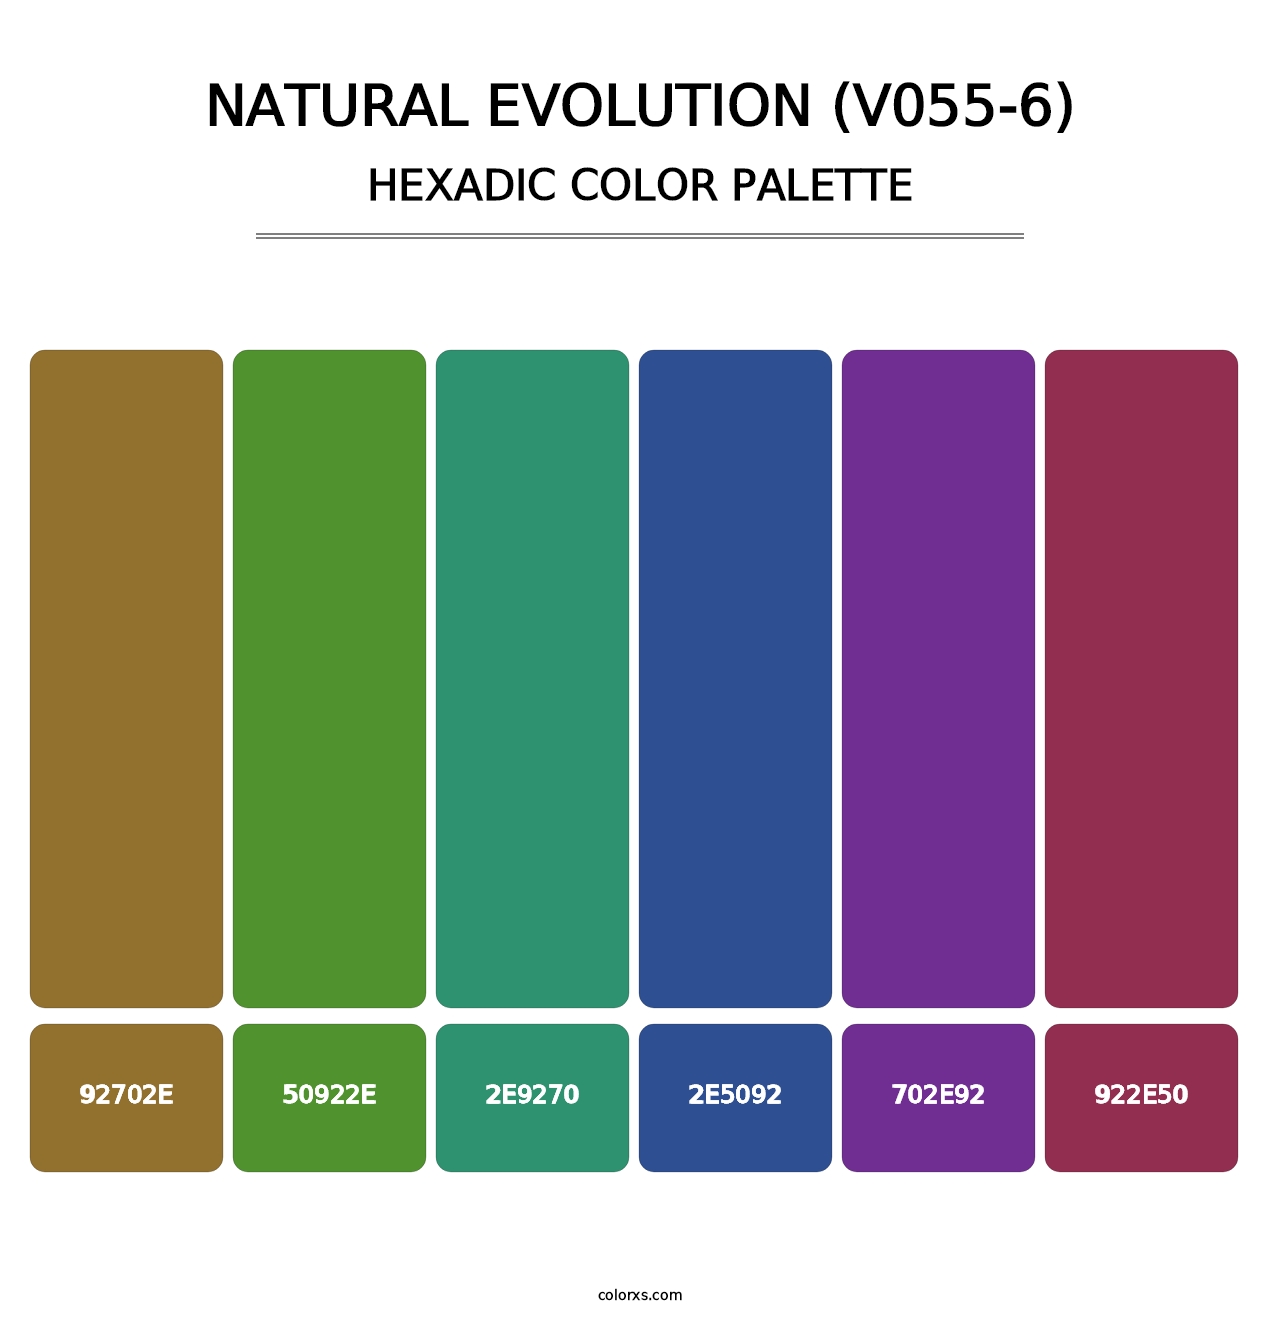 Natural Evolution (V055-6) - Hexadic Color Palette